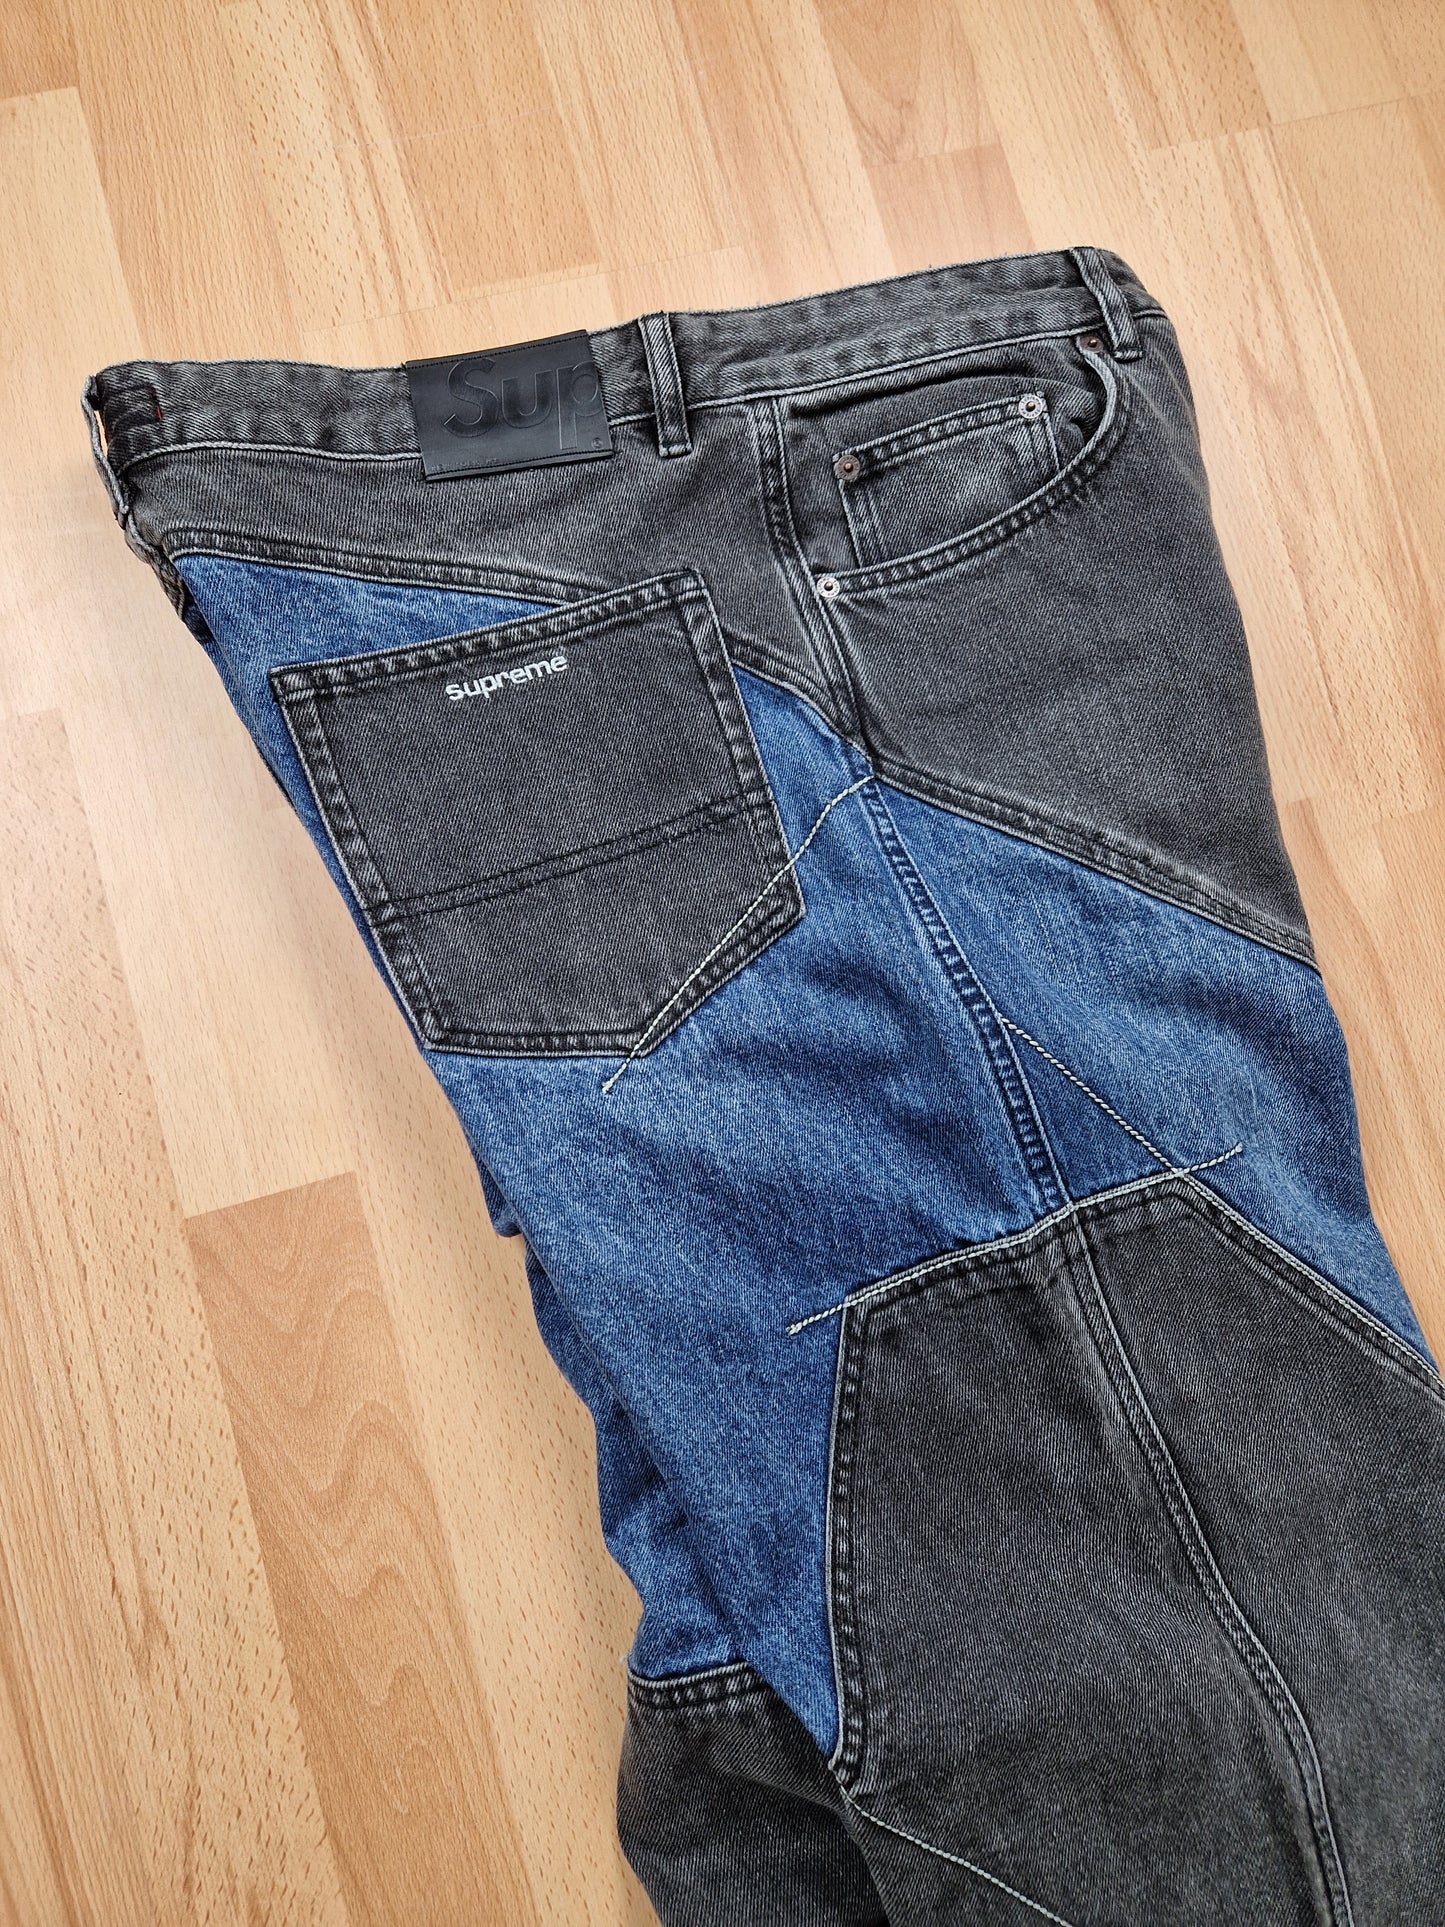 RARE Supreme 2-Tone Panelled Denim Jeans (34-36x32)